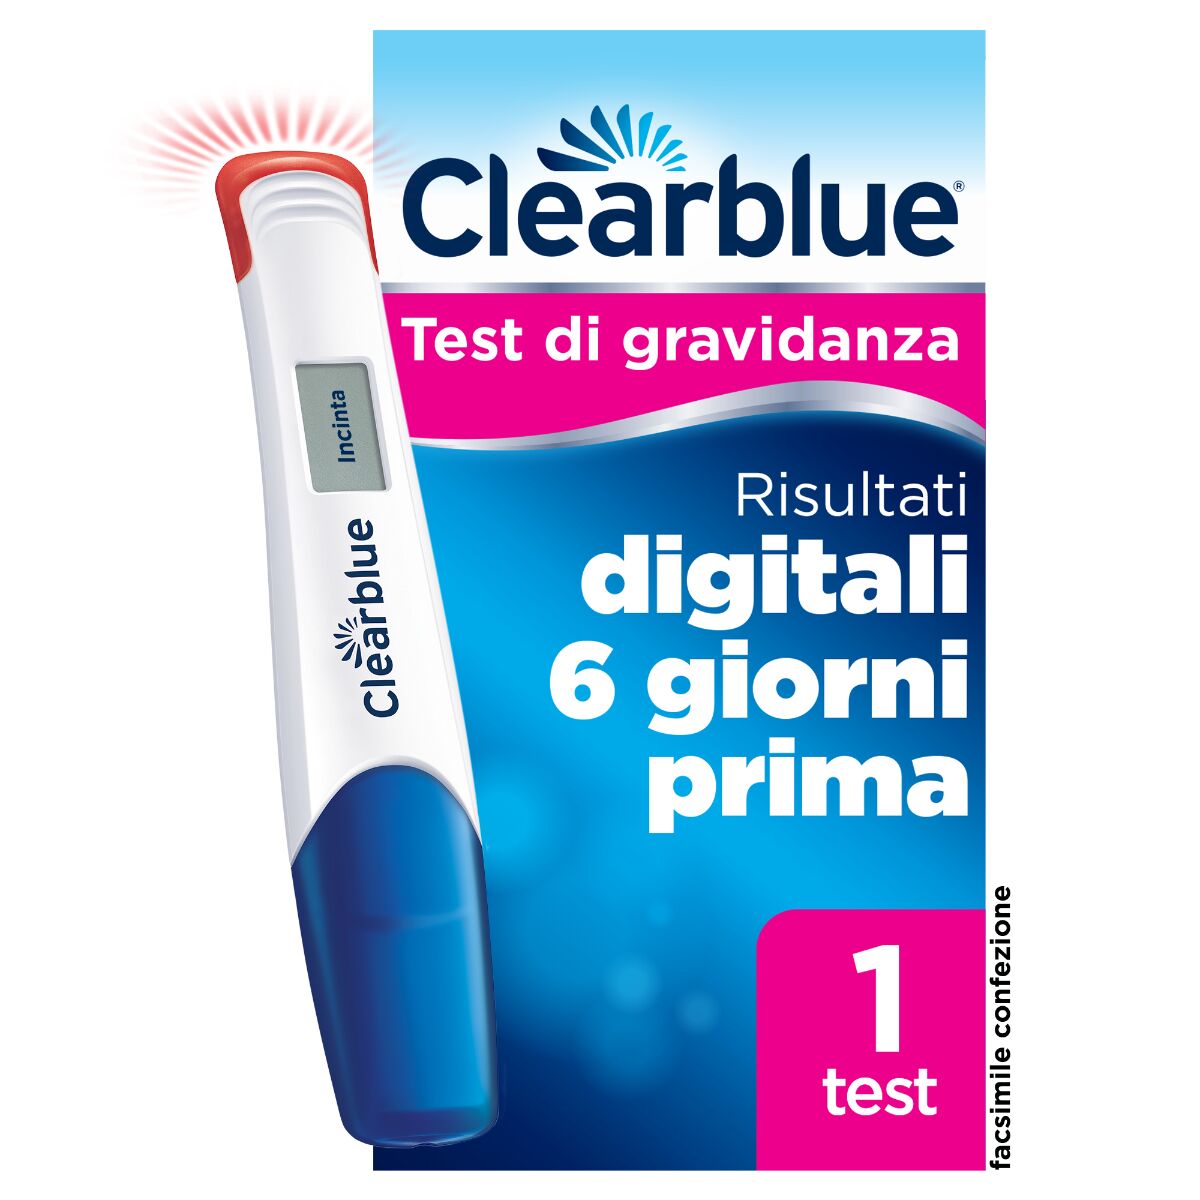 clearblue test di gravidanza rilevazione digitale precoce 1 test digitale